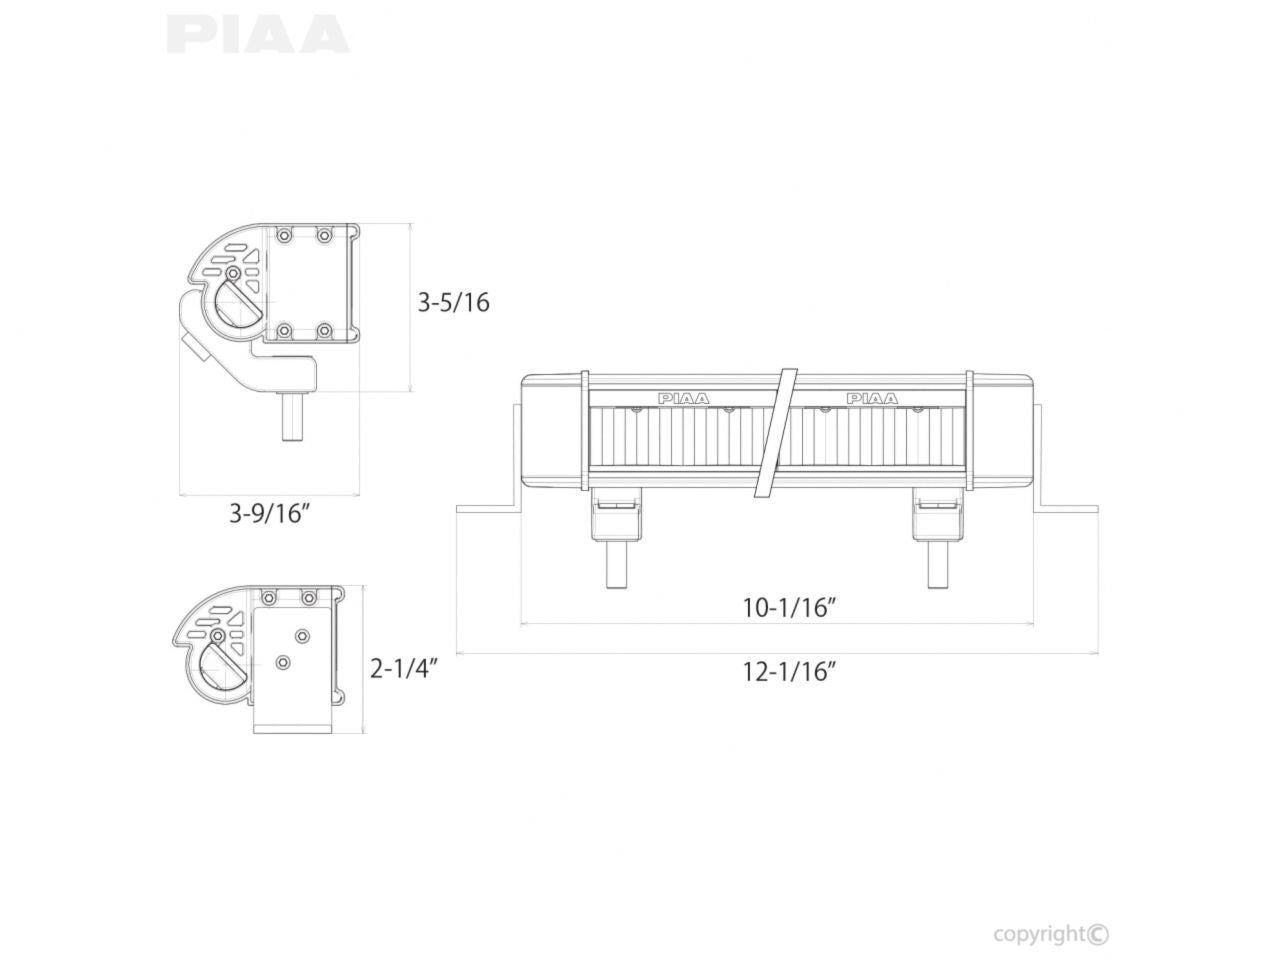 PIAA 10' LED Light Bar Hybrid